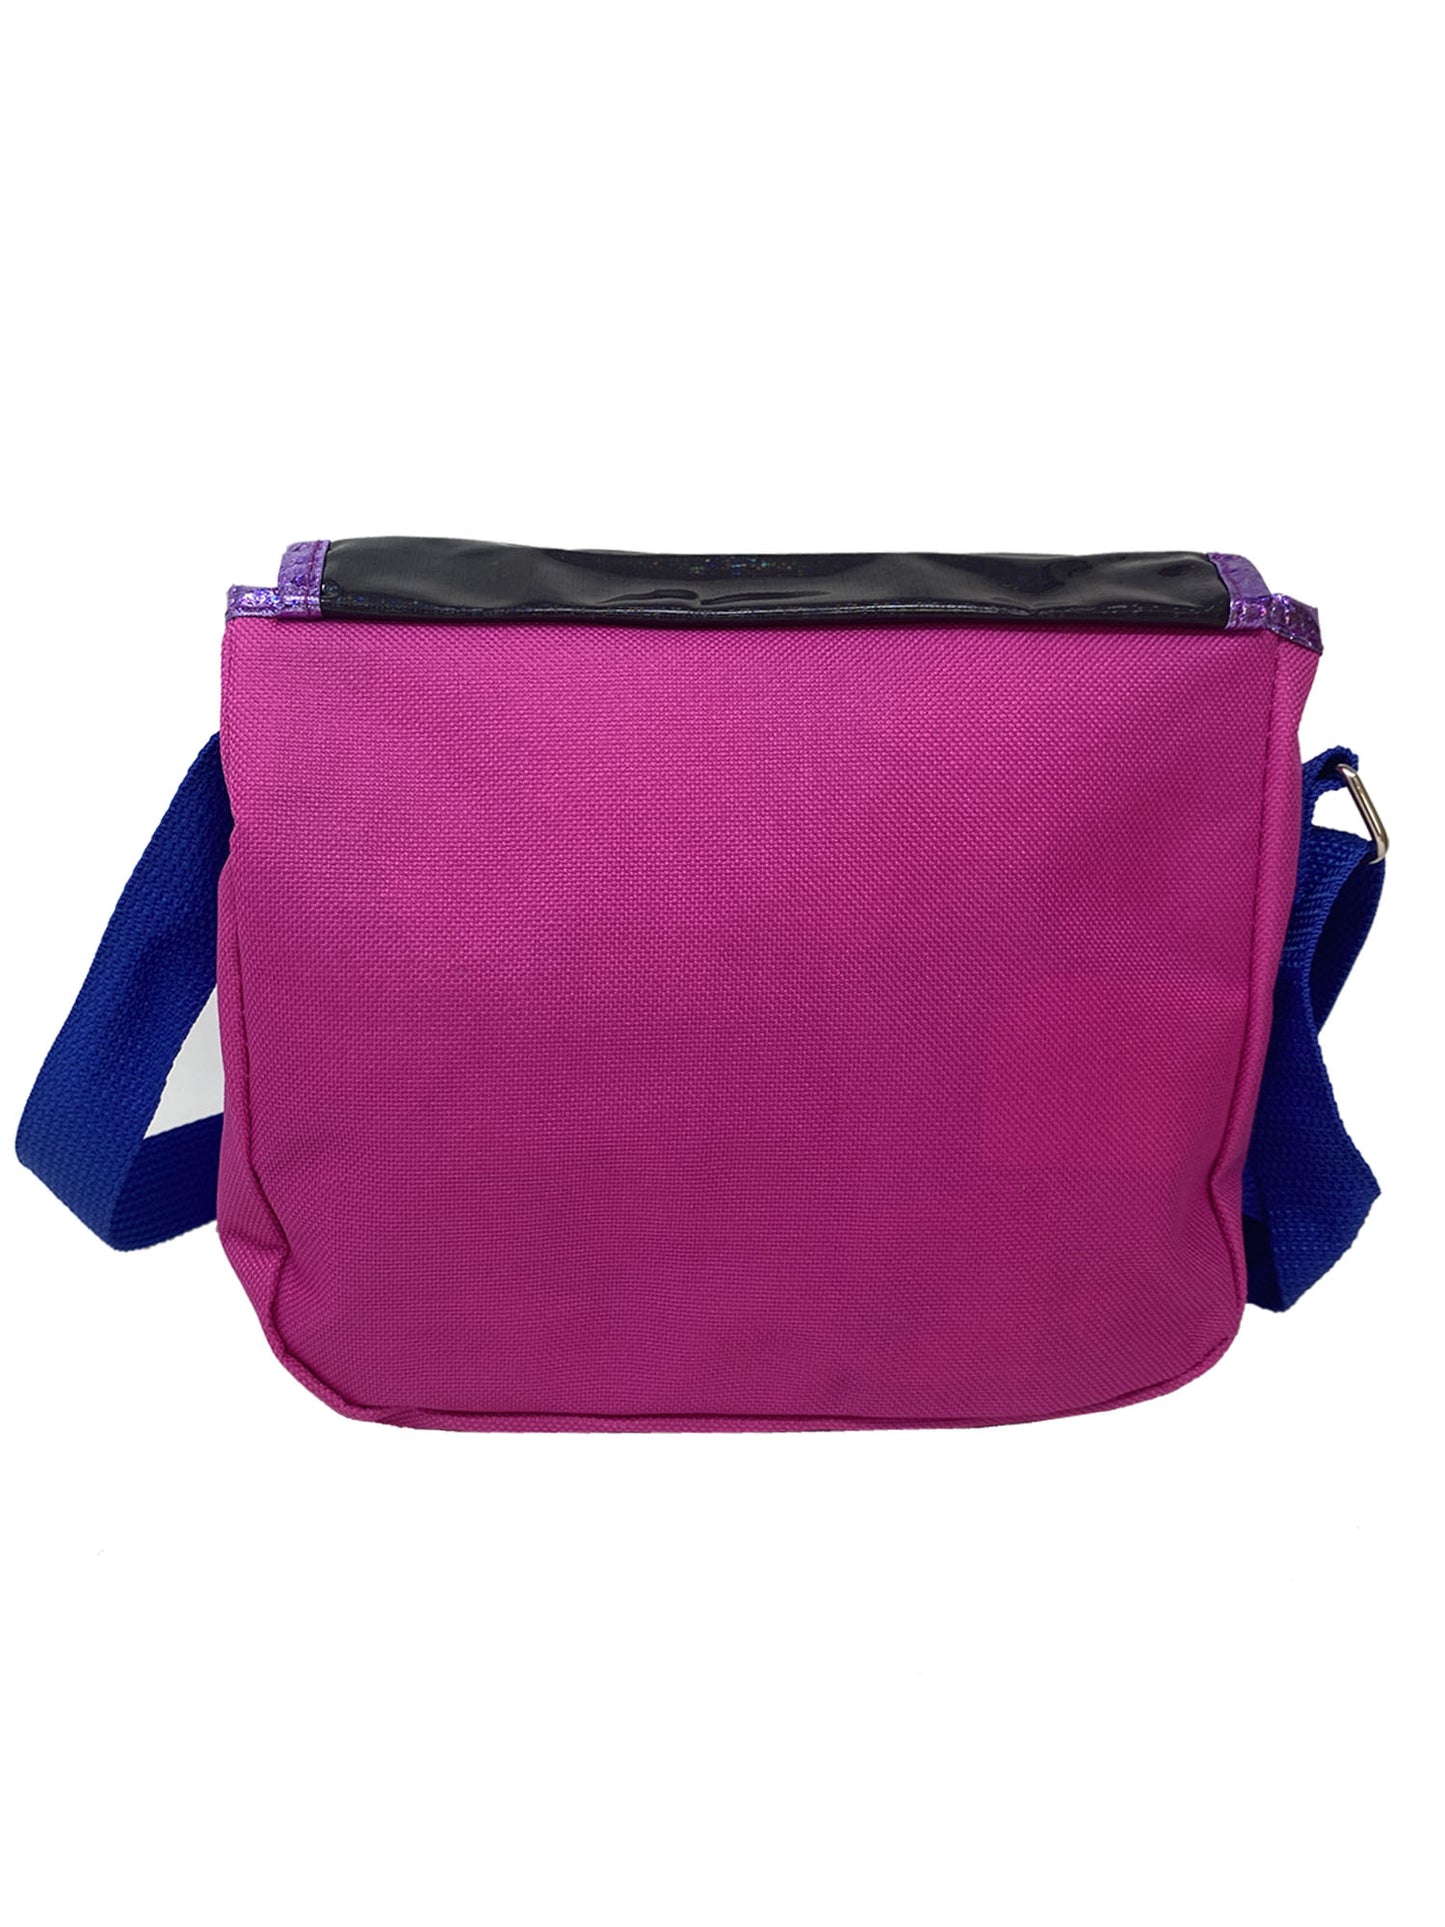 Disney Stitch Flap Crossbody Bag Purse Girls Black Purple Small 8"